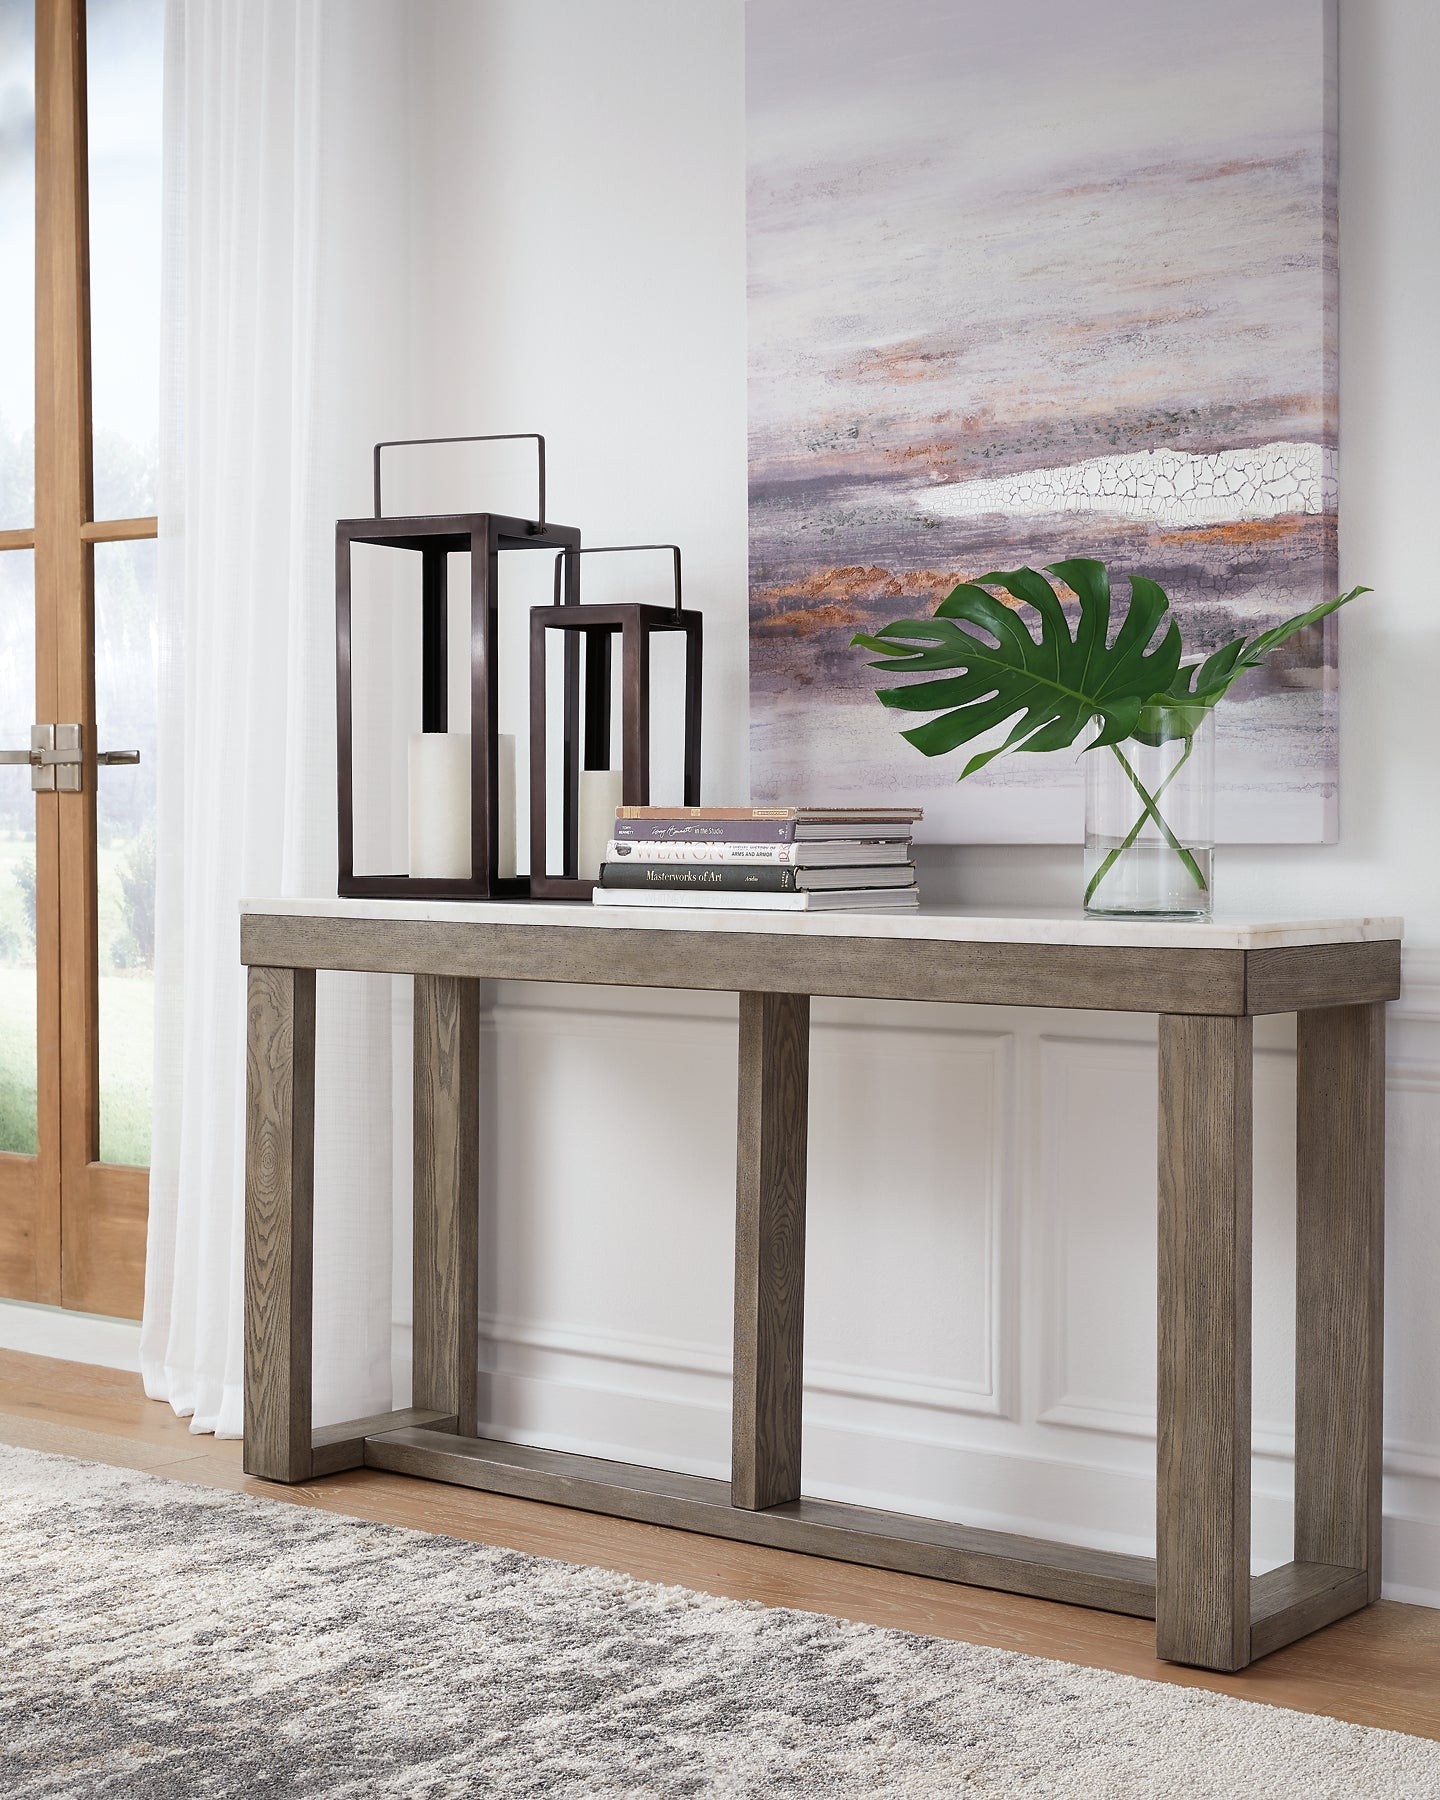 Loyaska Sofa Table at Cloud 9 Mattress & Furniture furniture, home furnishing, home decor